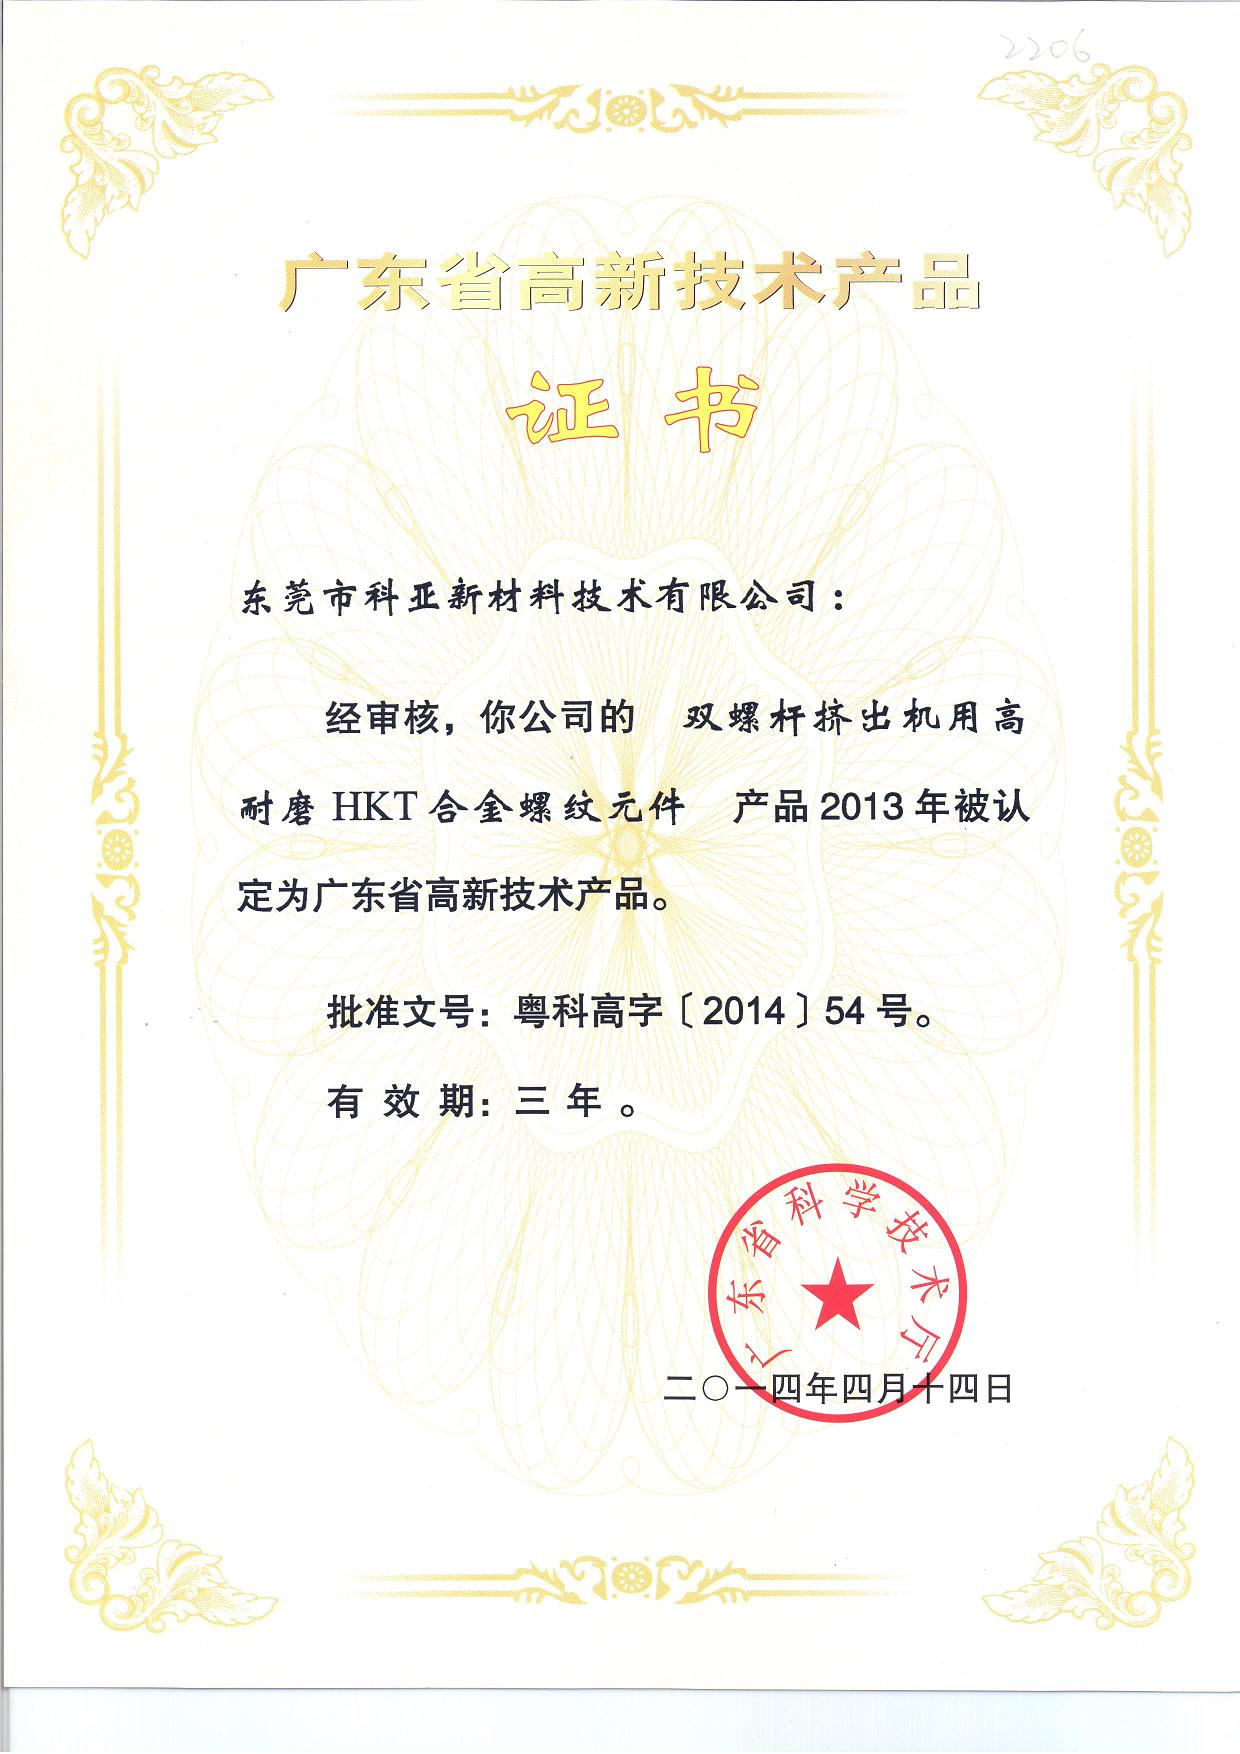 HKT高新技术产品证书